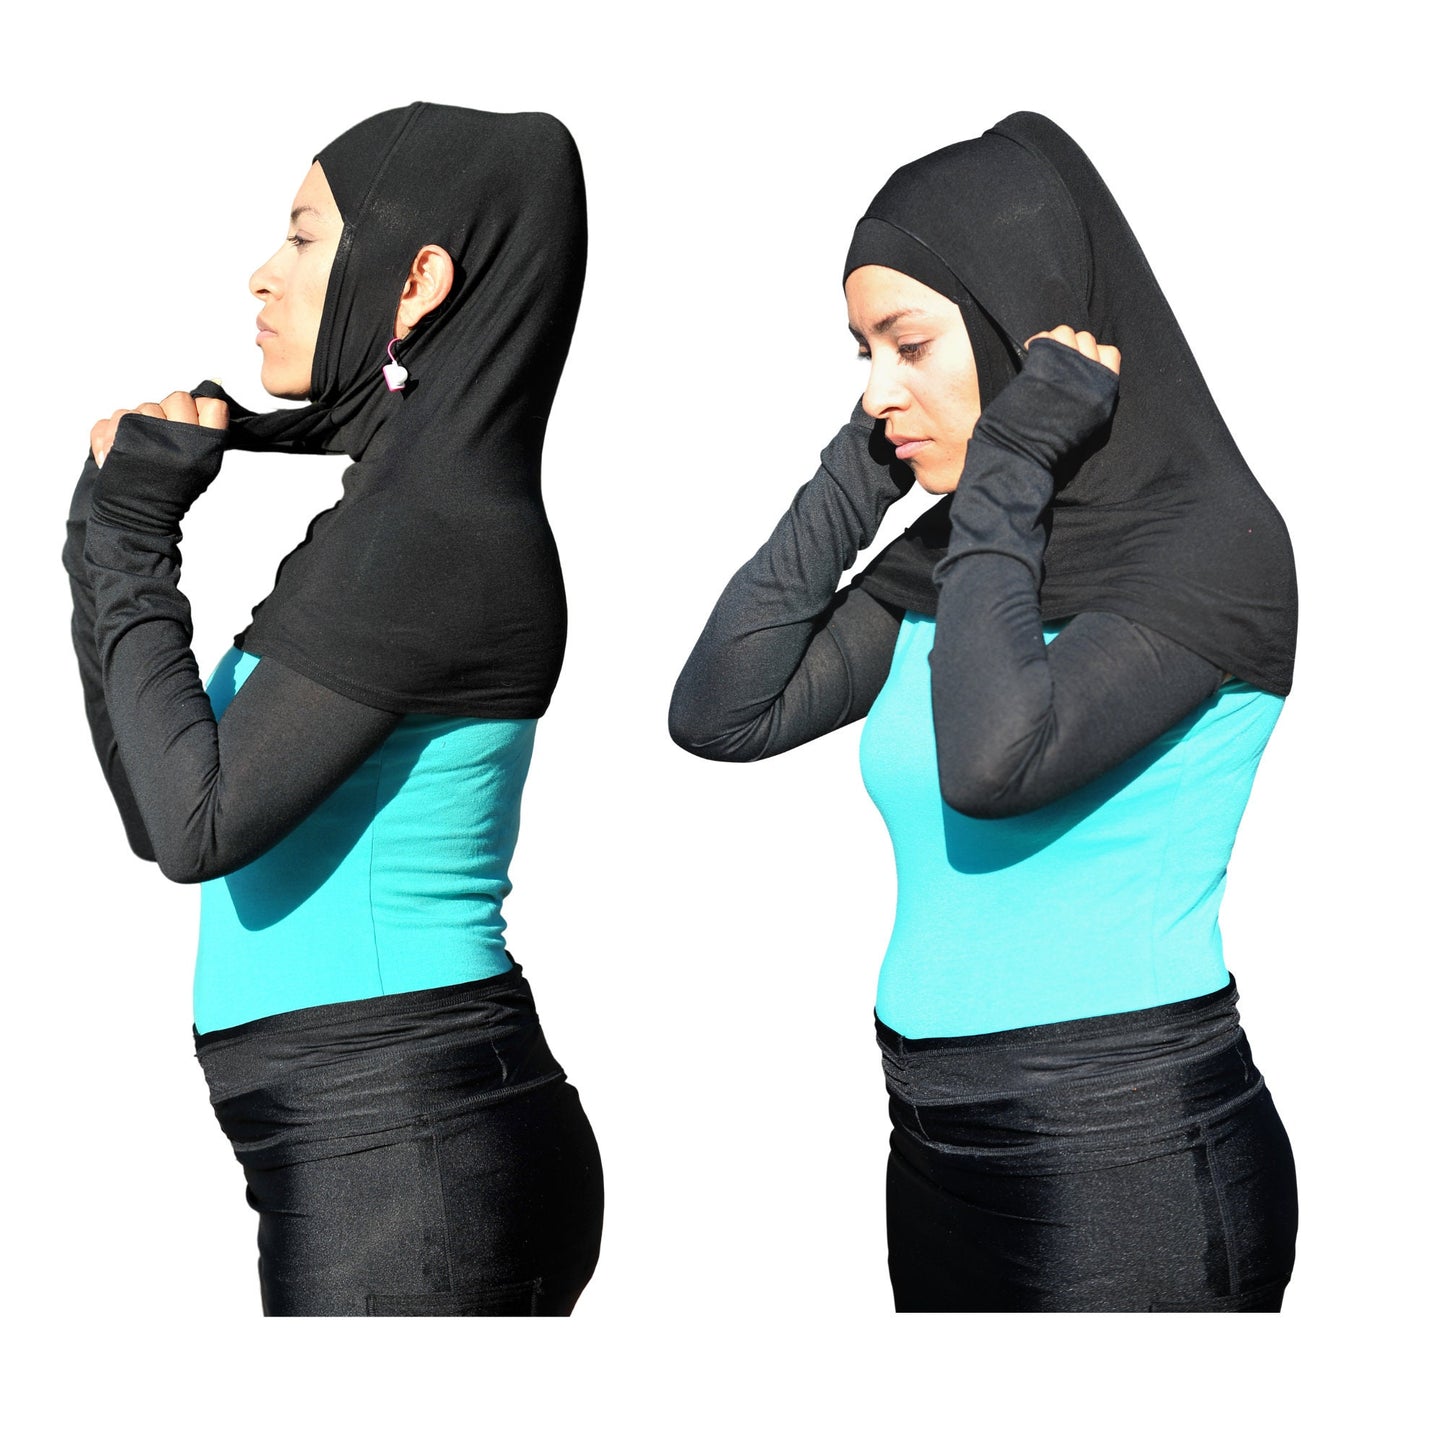 Innovative Hijab, Hijab with Pocket, Hijab for Airpods, Hijab for Glasses, Athletic Hijab, Medical Hijab, Al Amira, Ninja Instant Hijab